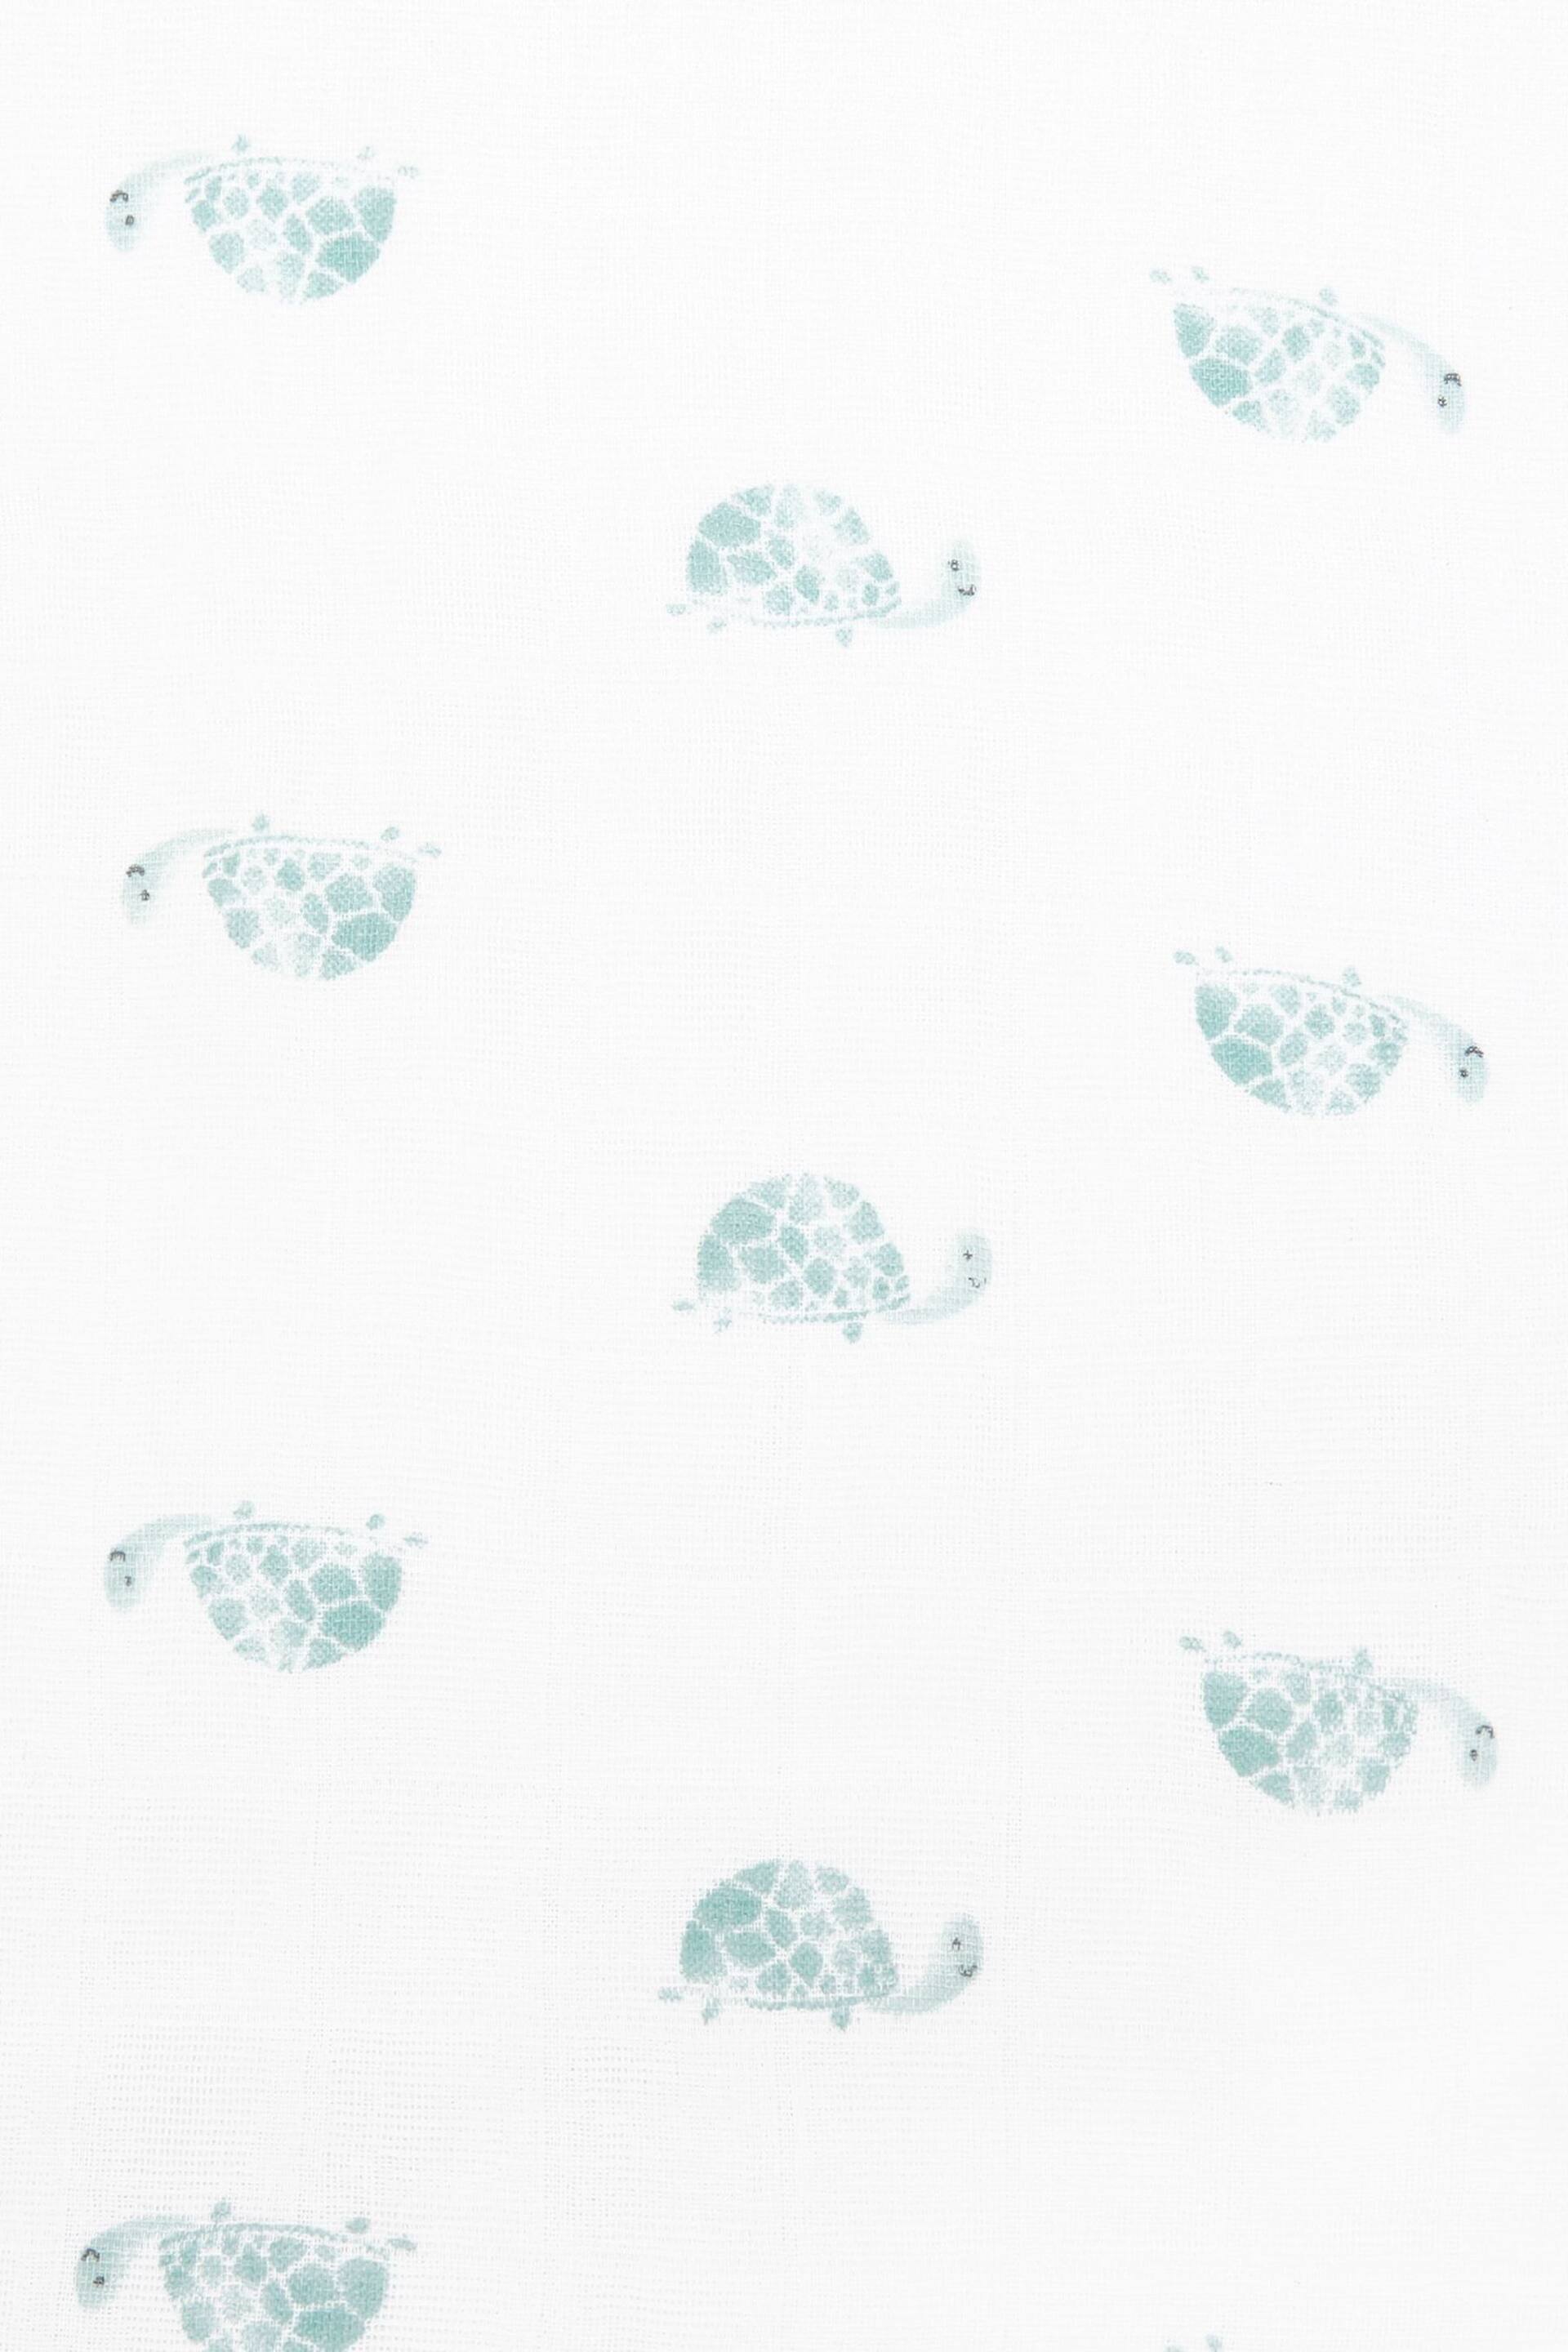 aden + anais Blue Organic Cotton Muslin Blankets 4 Pack - Image 6 of 11